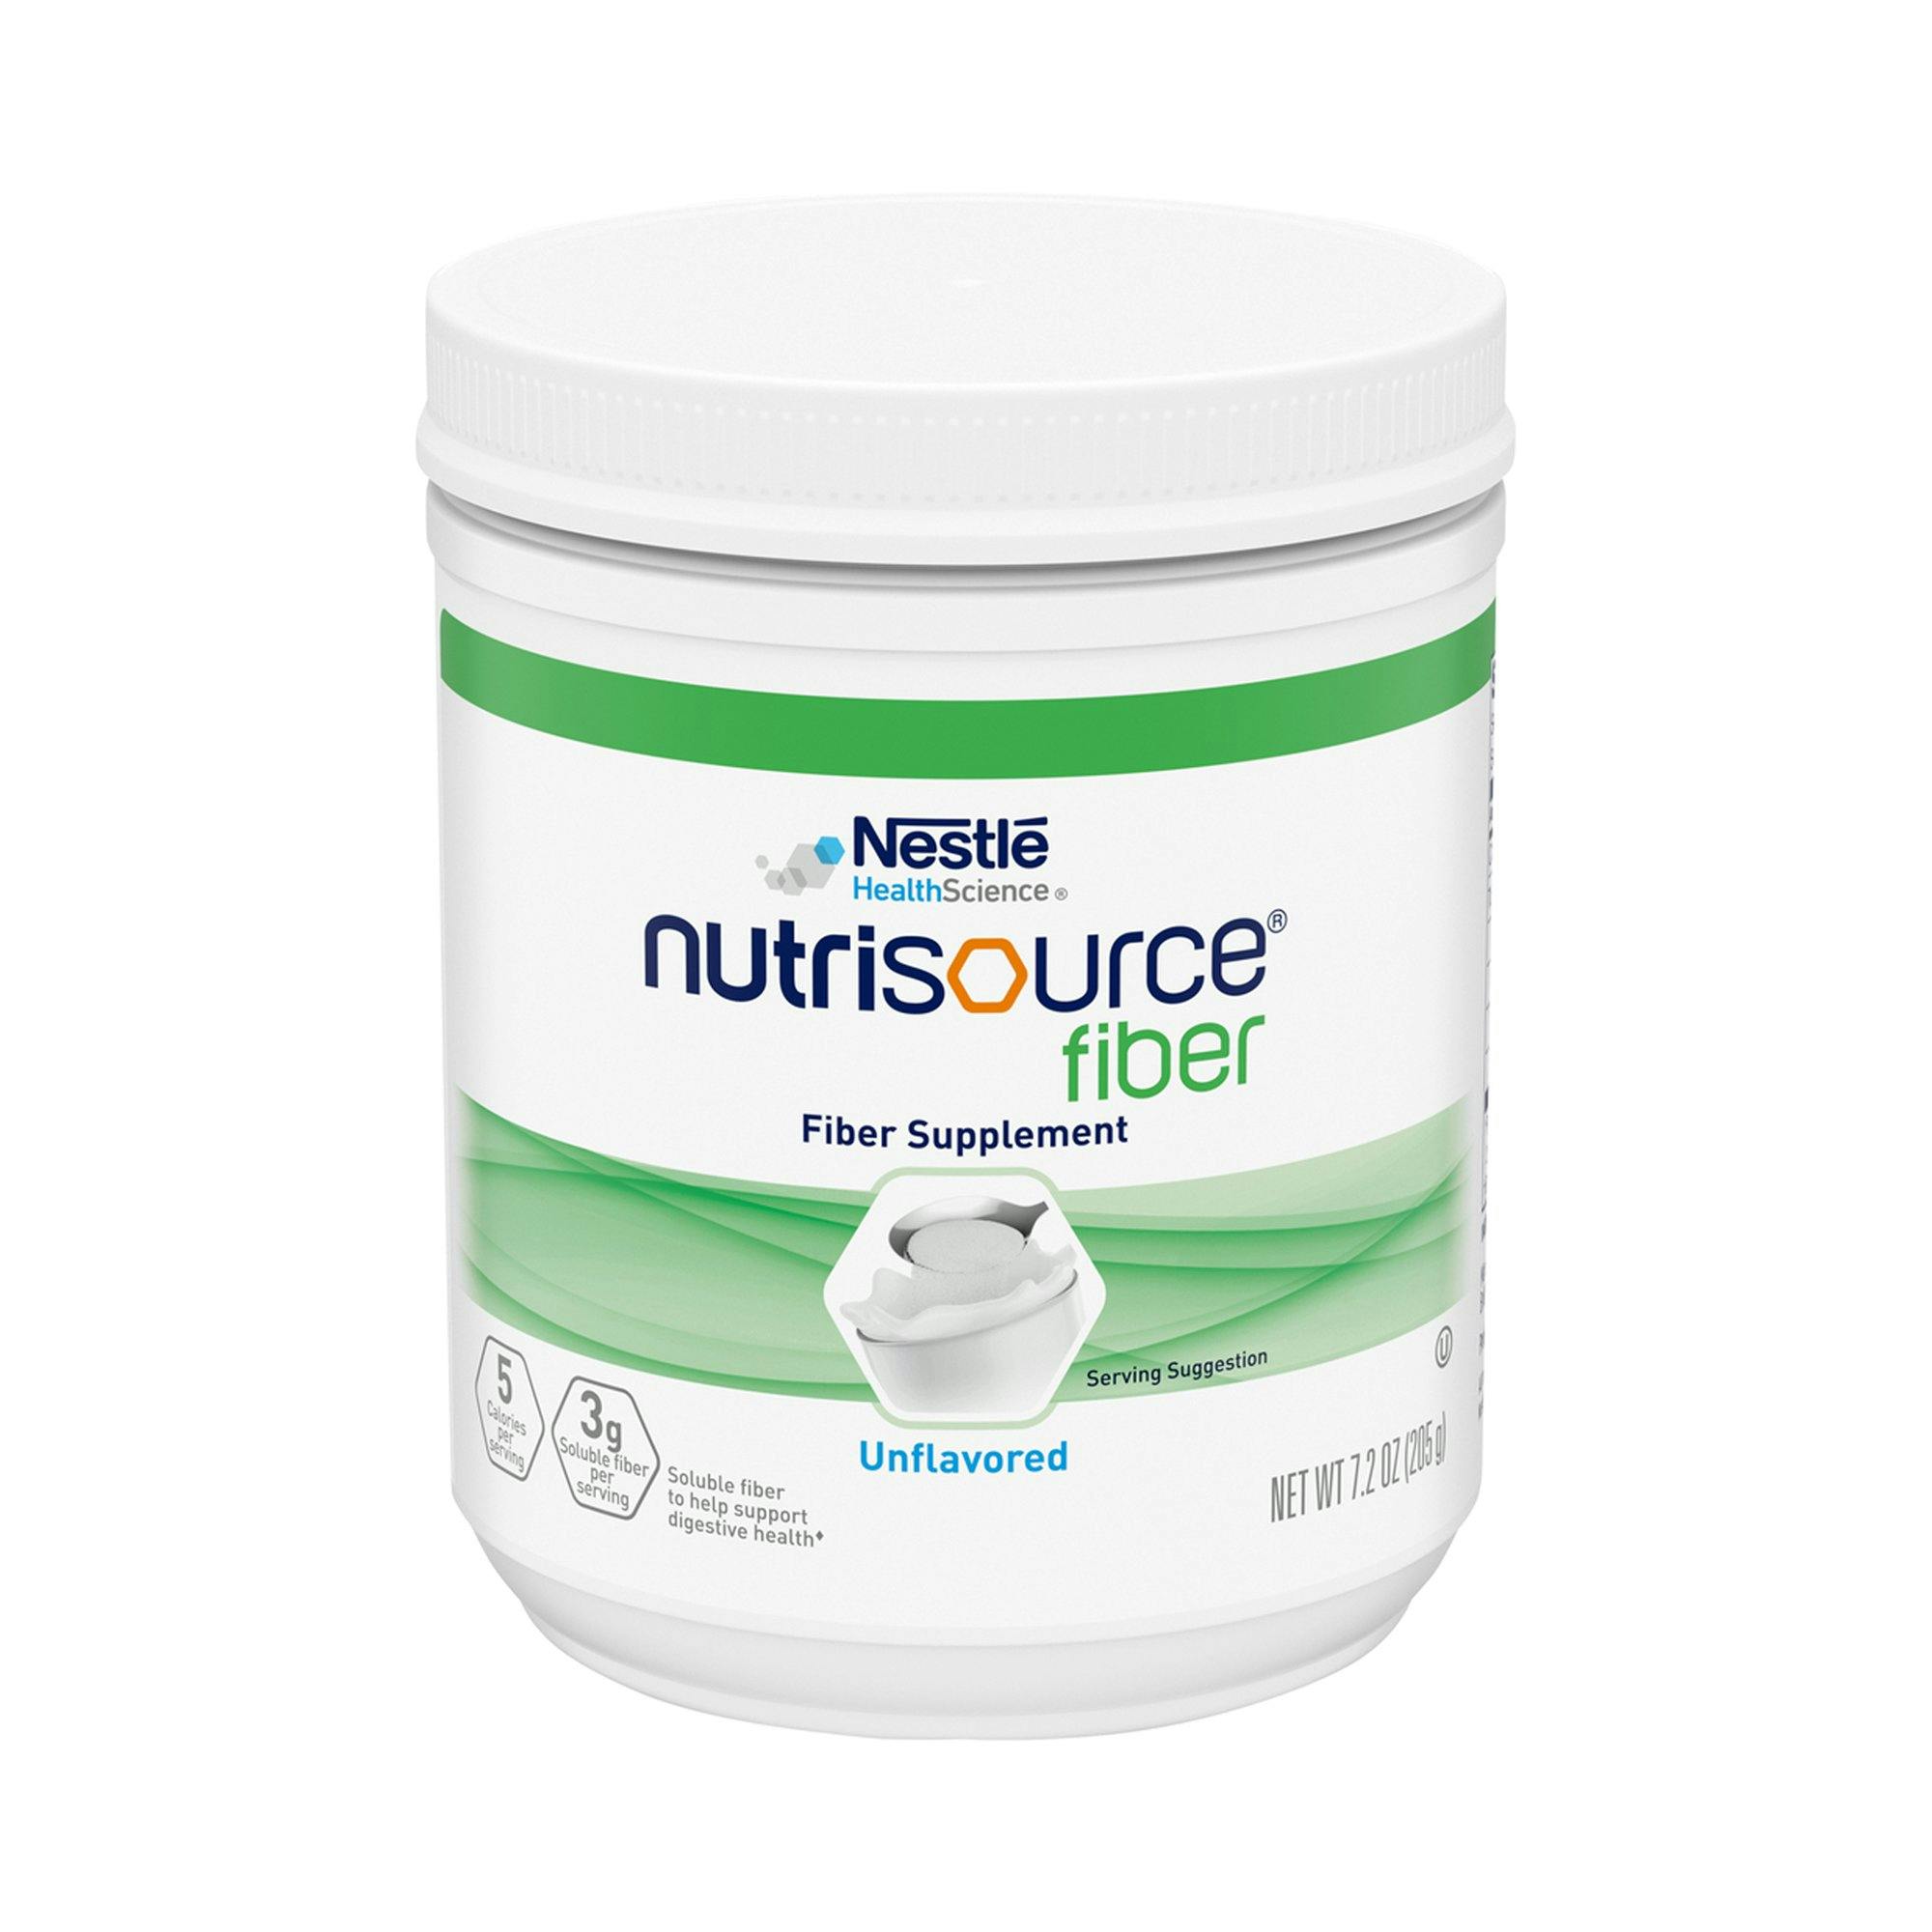 Nestle HealthScience Nutrisource fiber Fiber Supplement Powder, Unflavored, 7.2 oz., 10043900975518, 1 Each